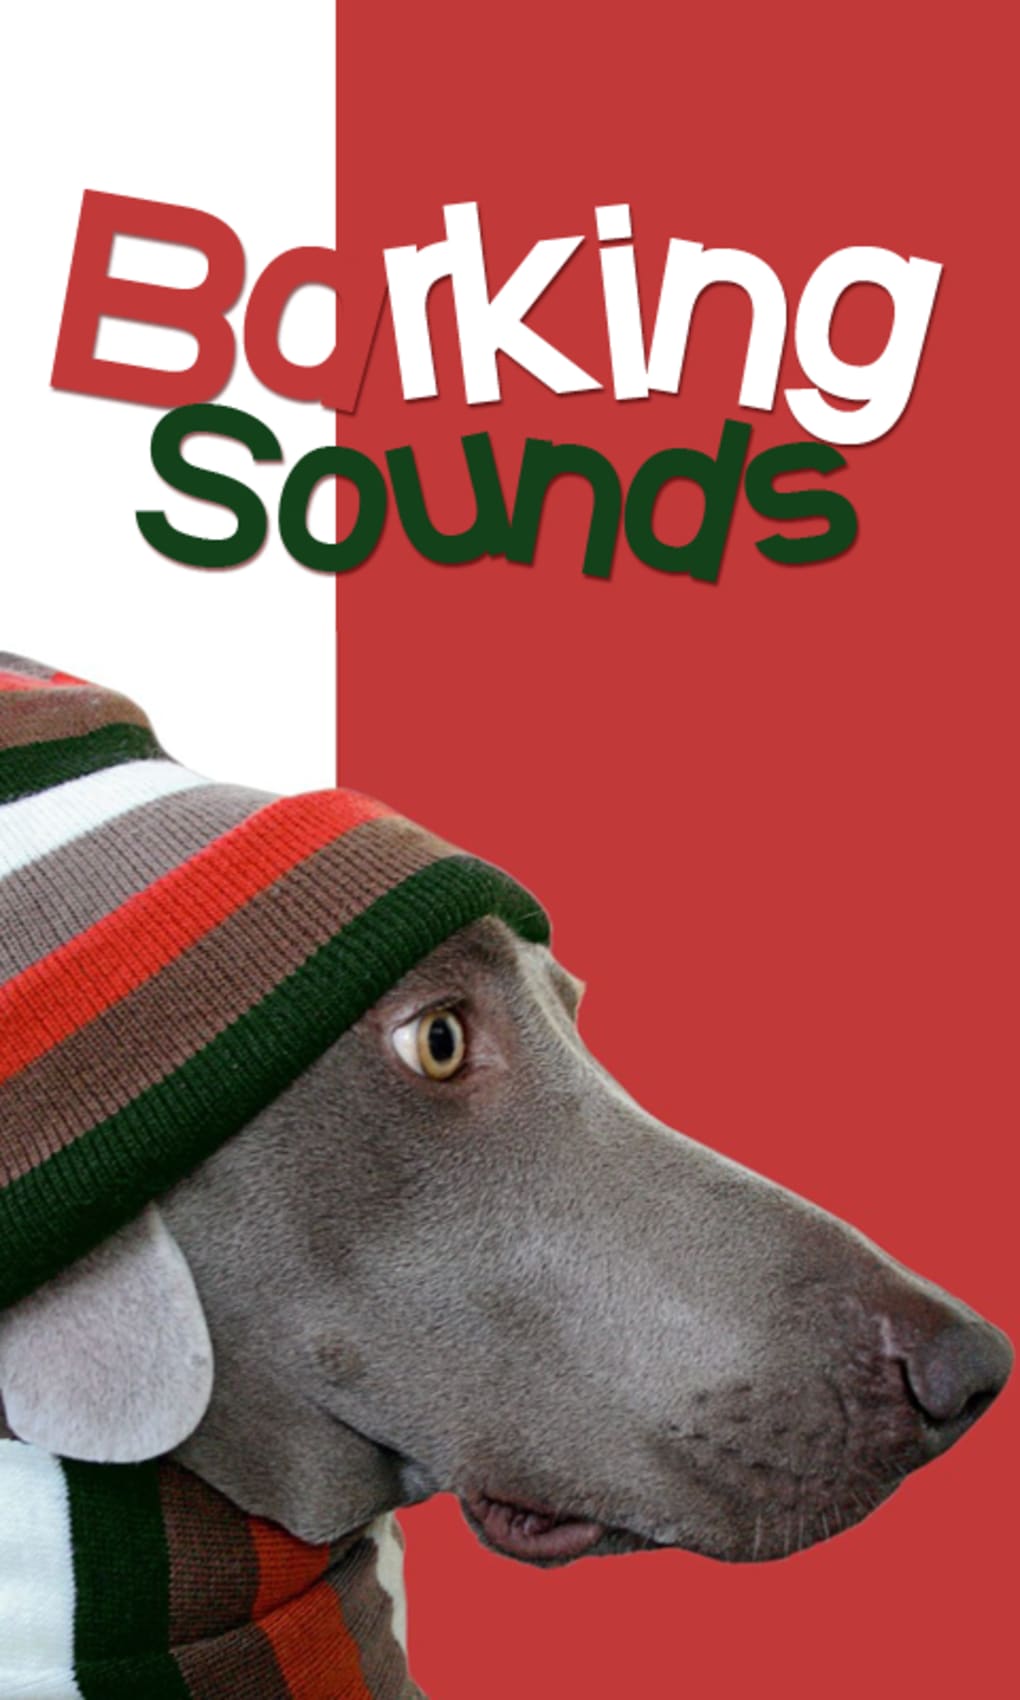 Barking sound. Bark Sound. Barking Sounds. Собака mp3 звук.